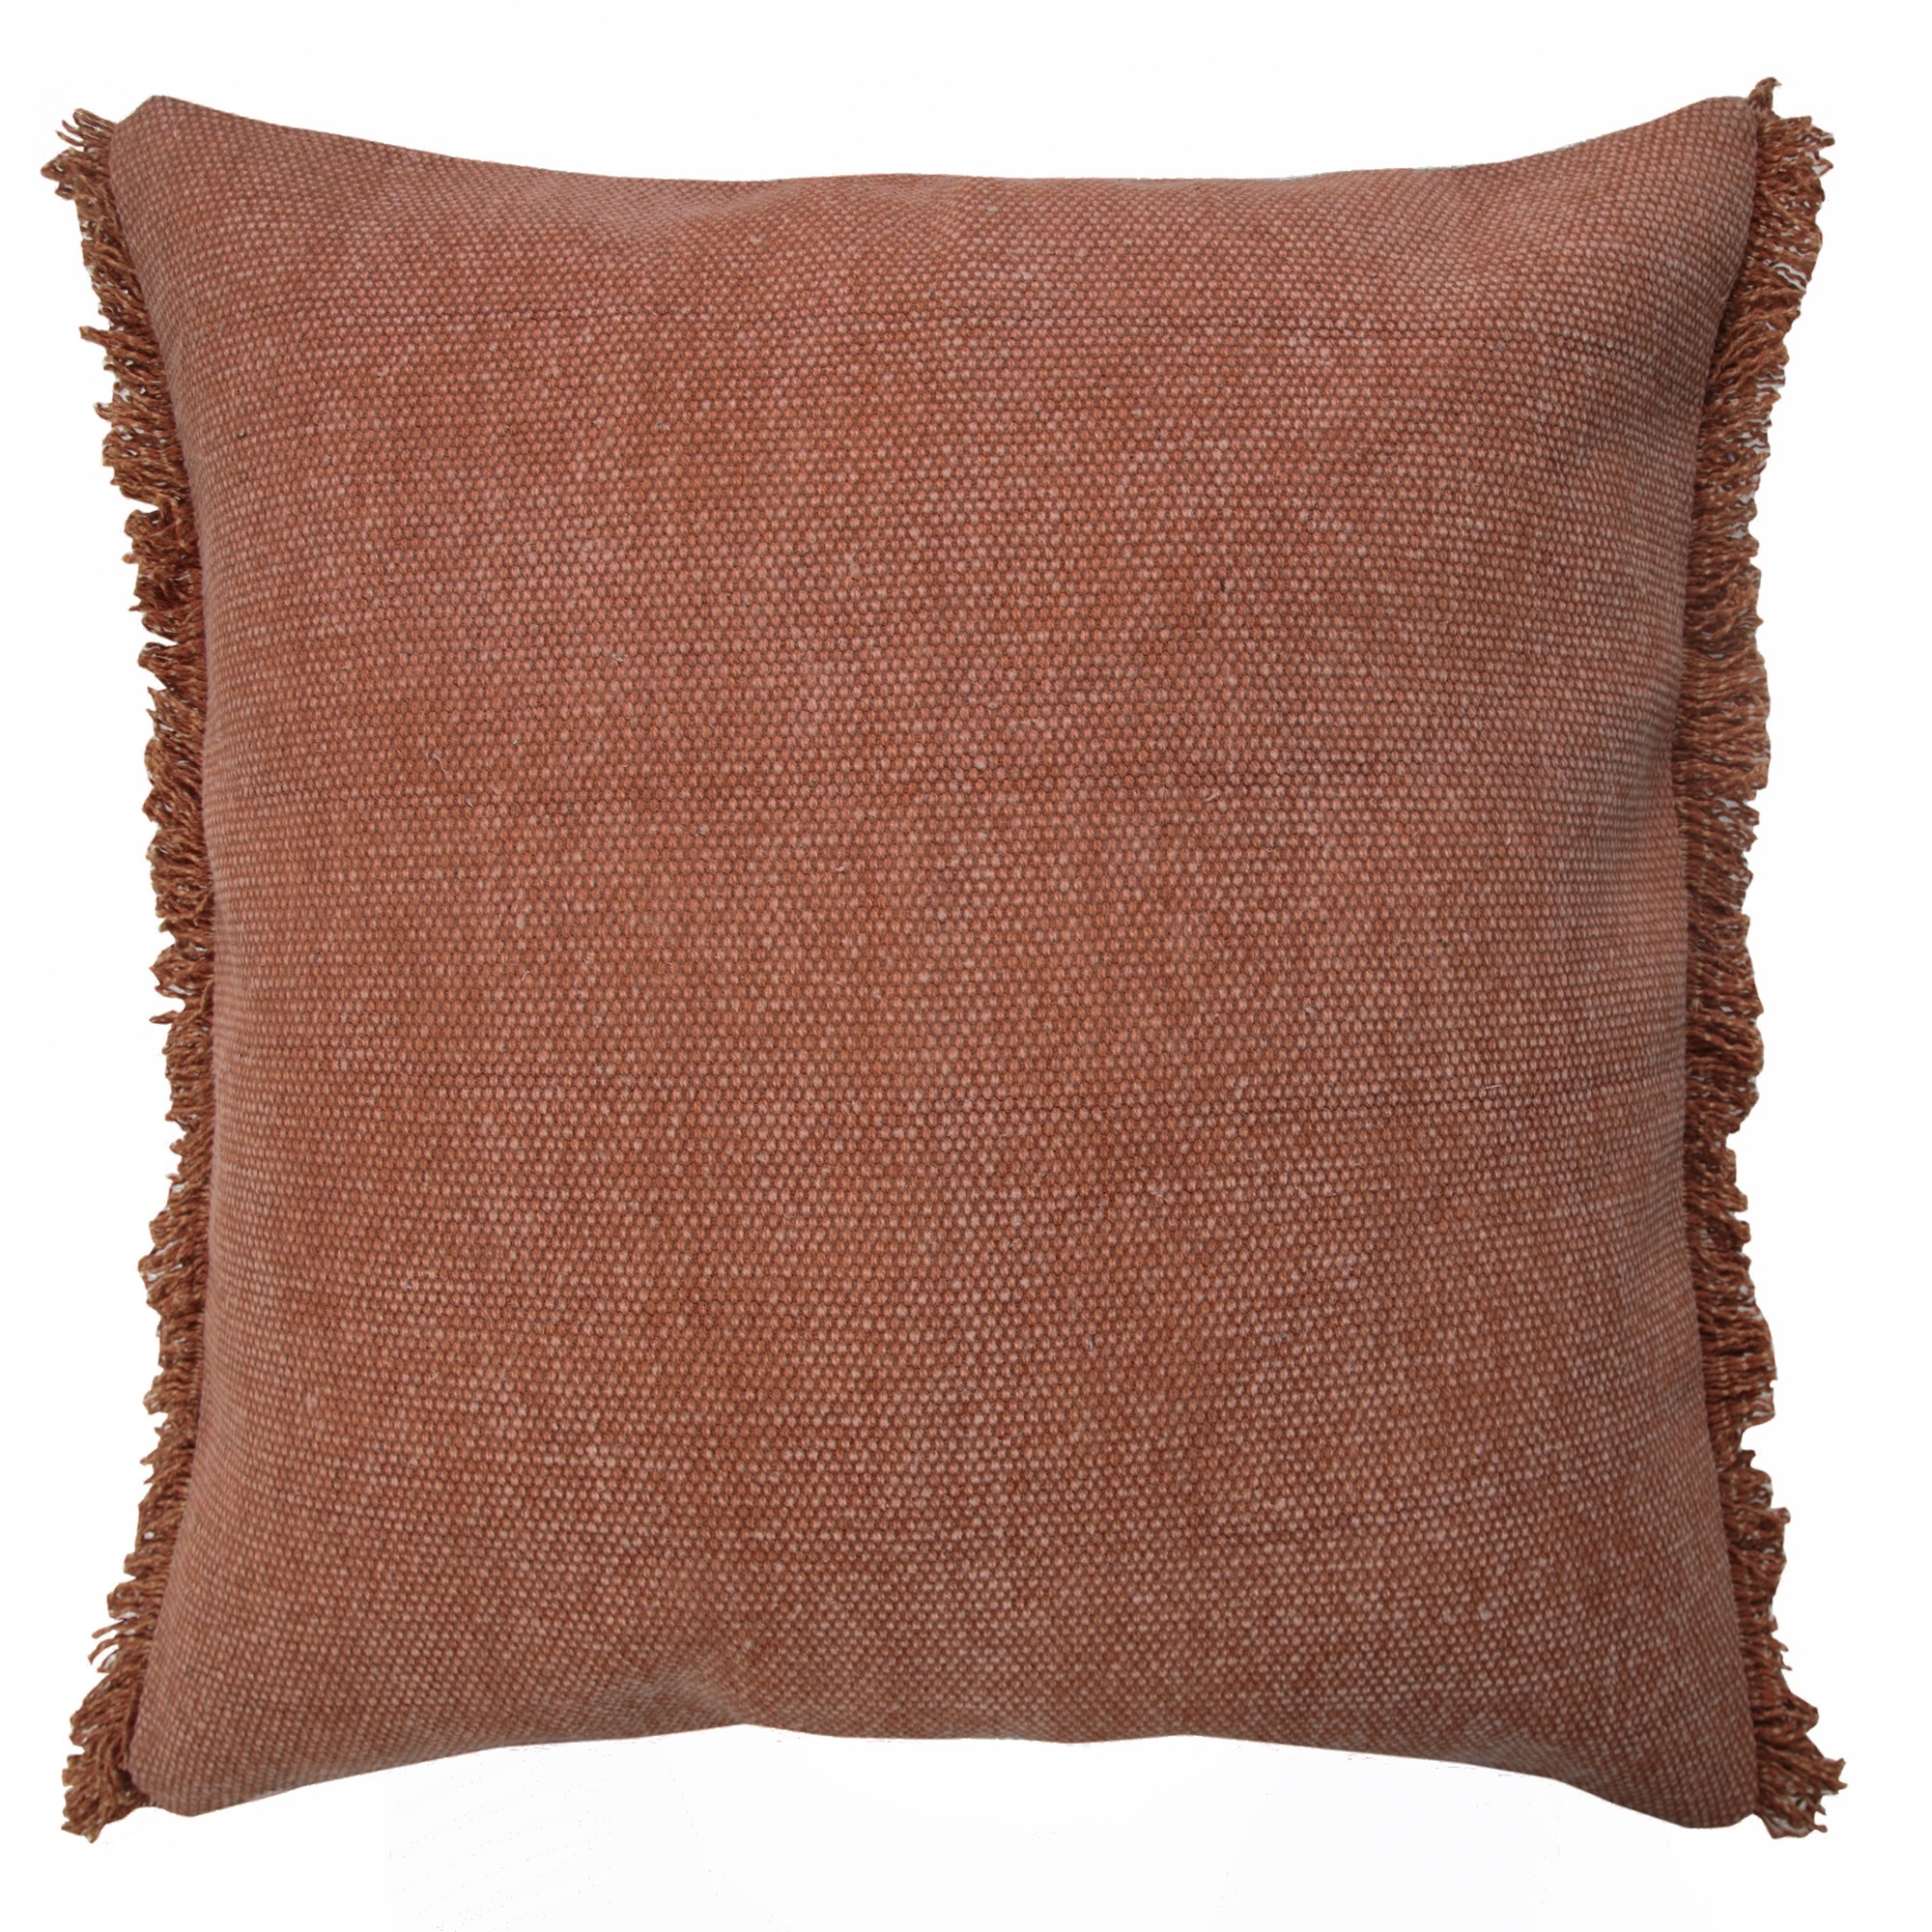 20" X 20" Adobe Clay 100% Cotton Zippered Pillow-516960-1